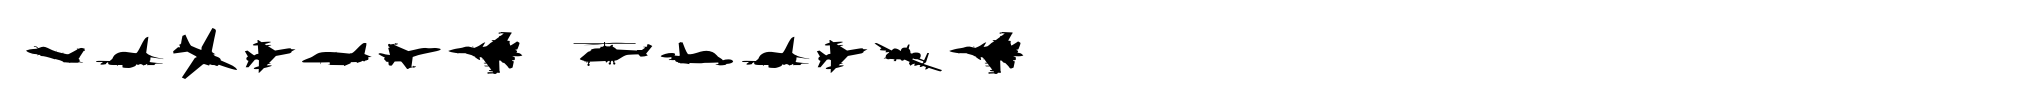 Wingbat Flight image